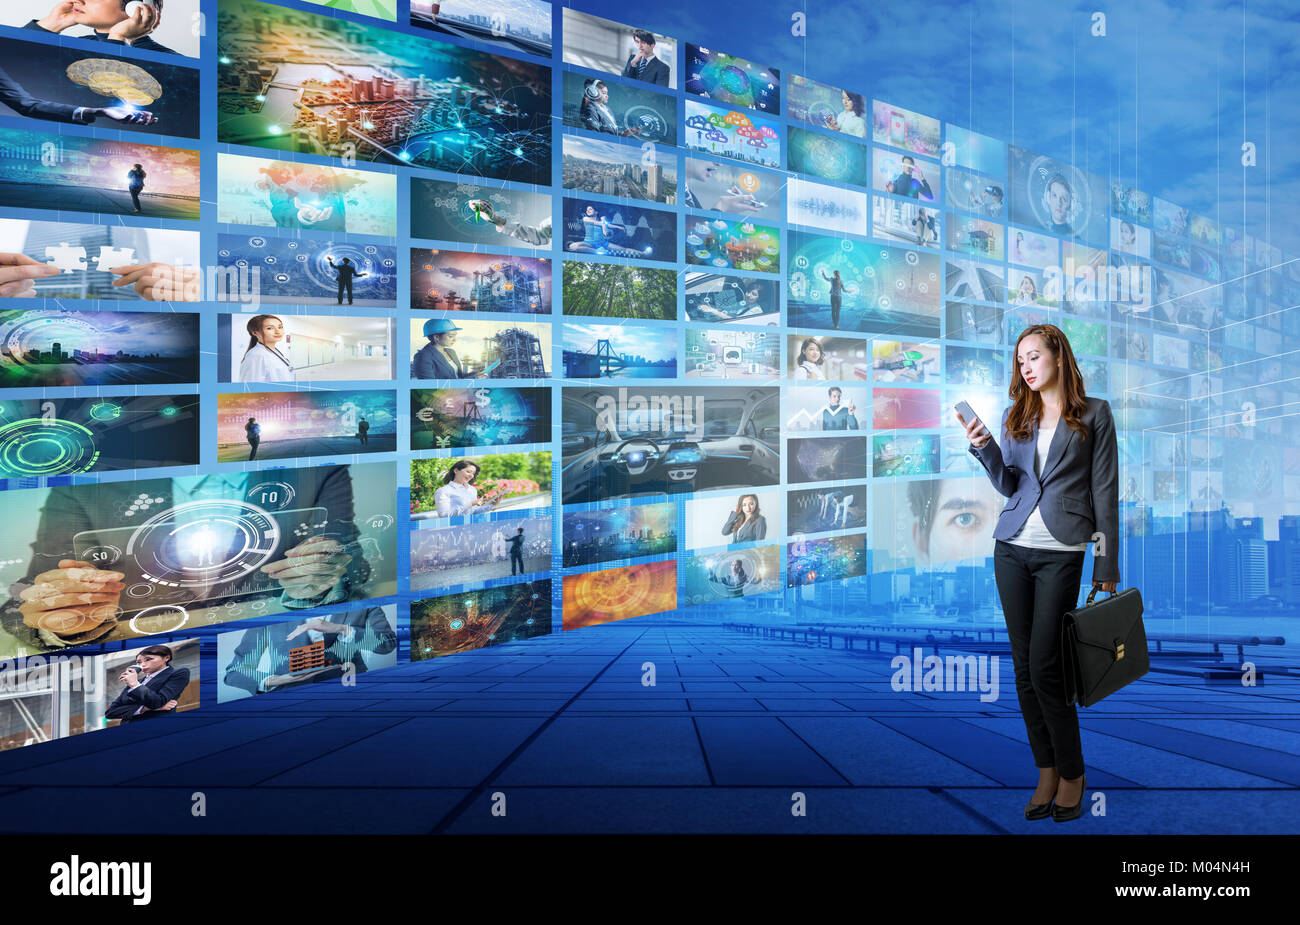 Video Hosting Website Film Streaming Service Digitales Fotoalbum Stockfotografie Alamy